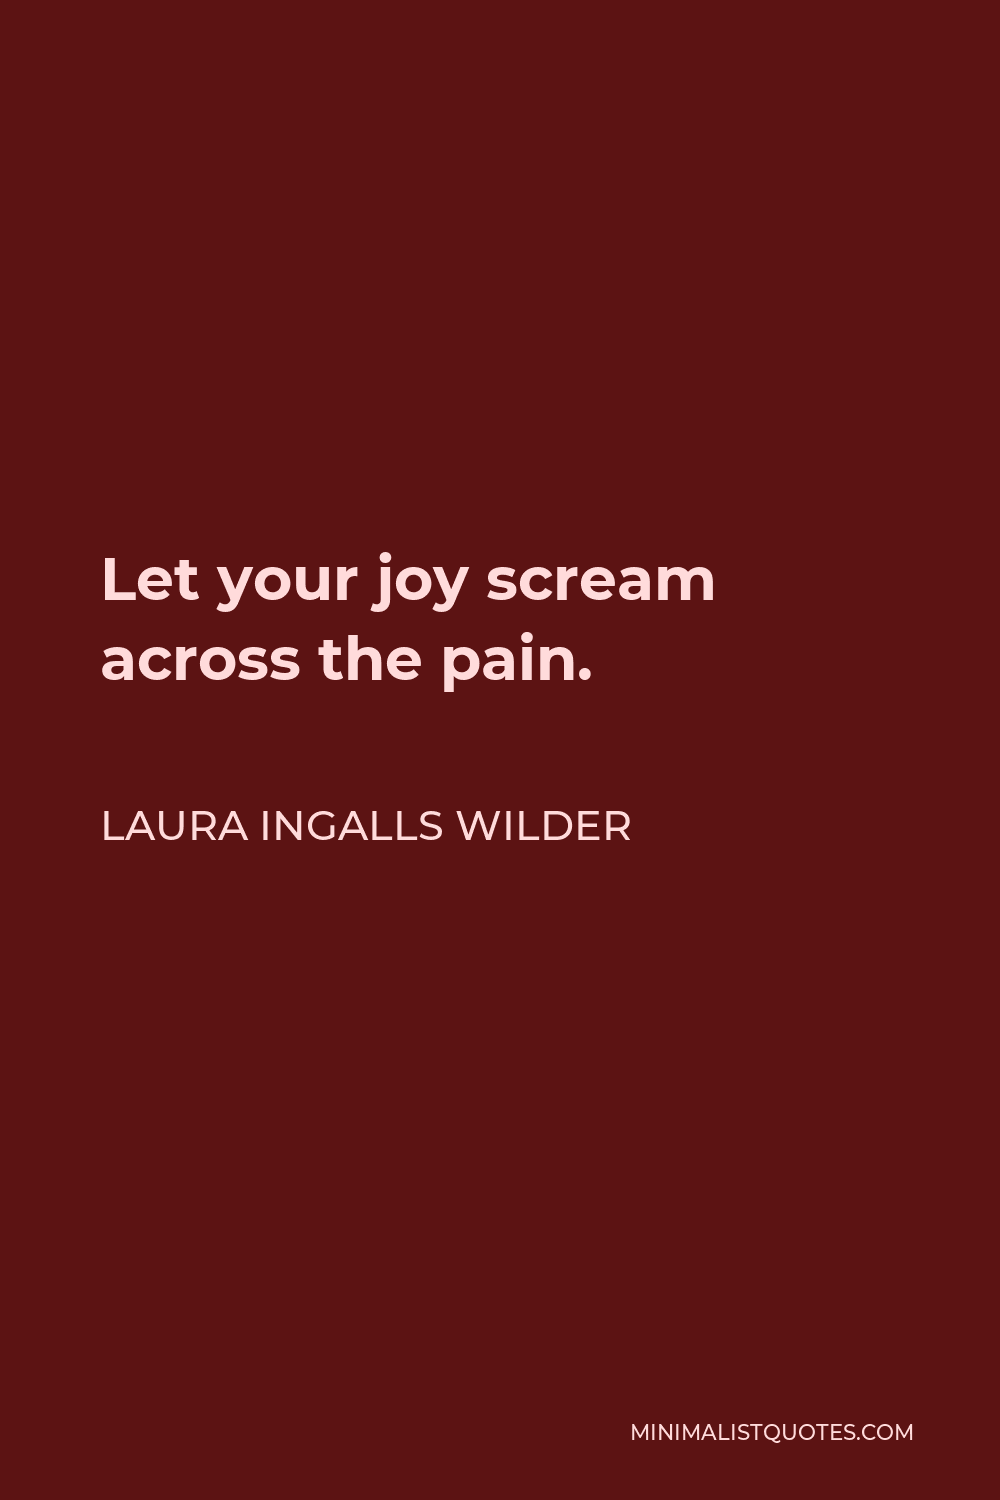 Laura Ingalls Wilder Quote - Let your joy scream across the pain.